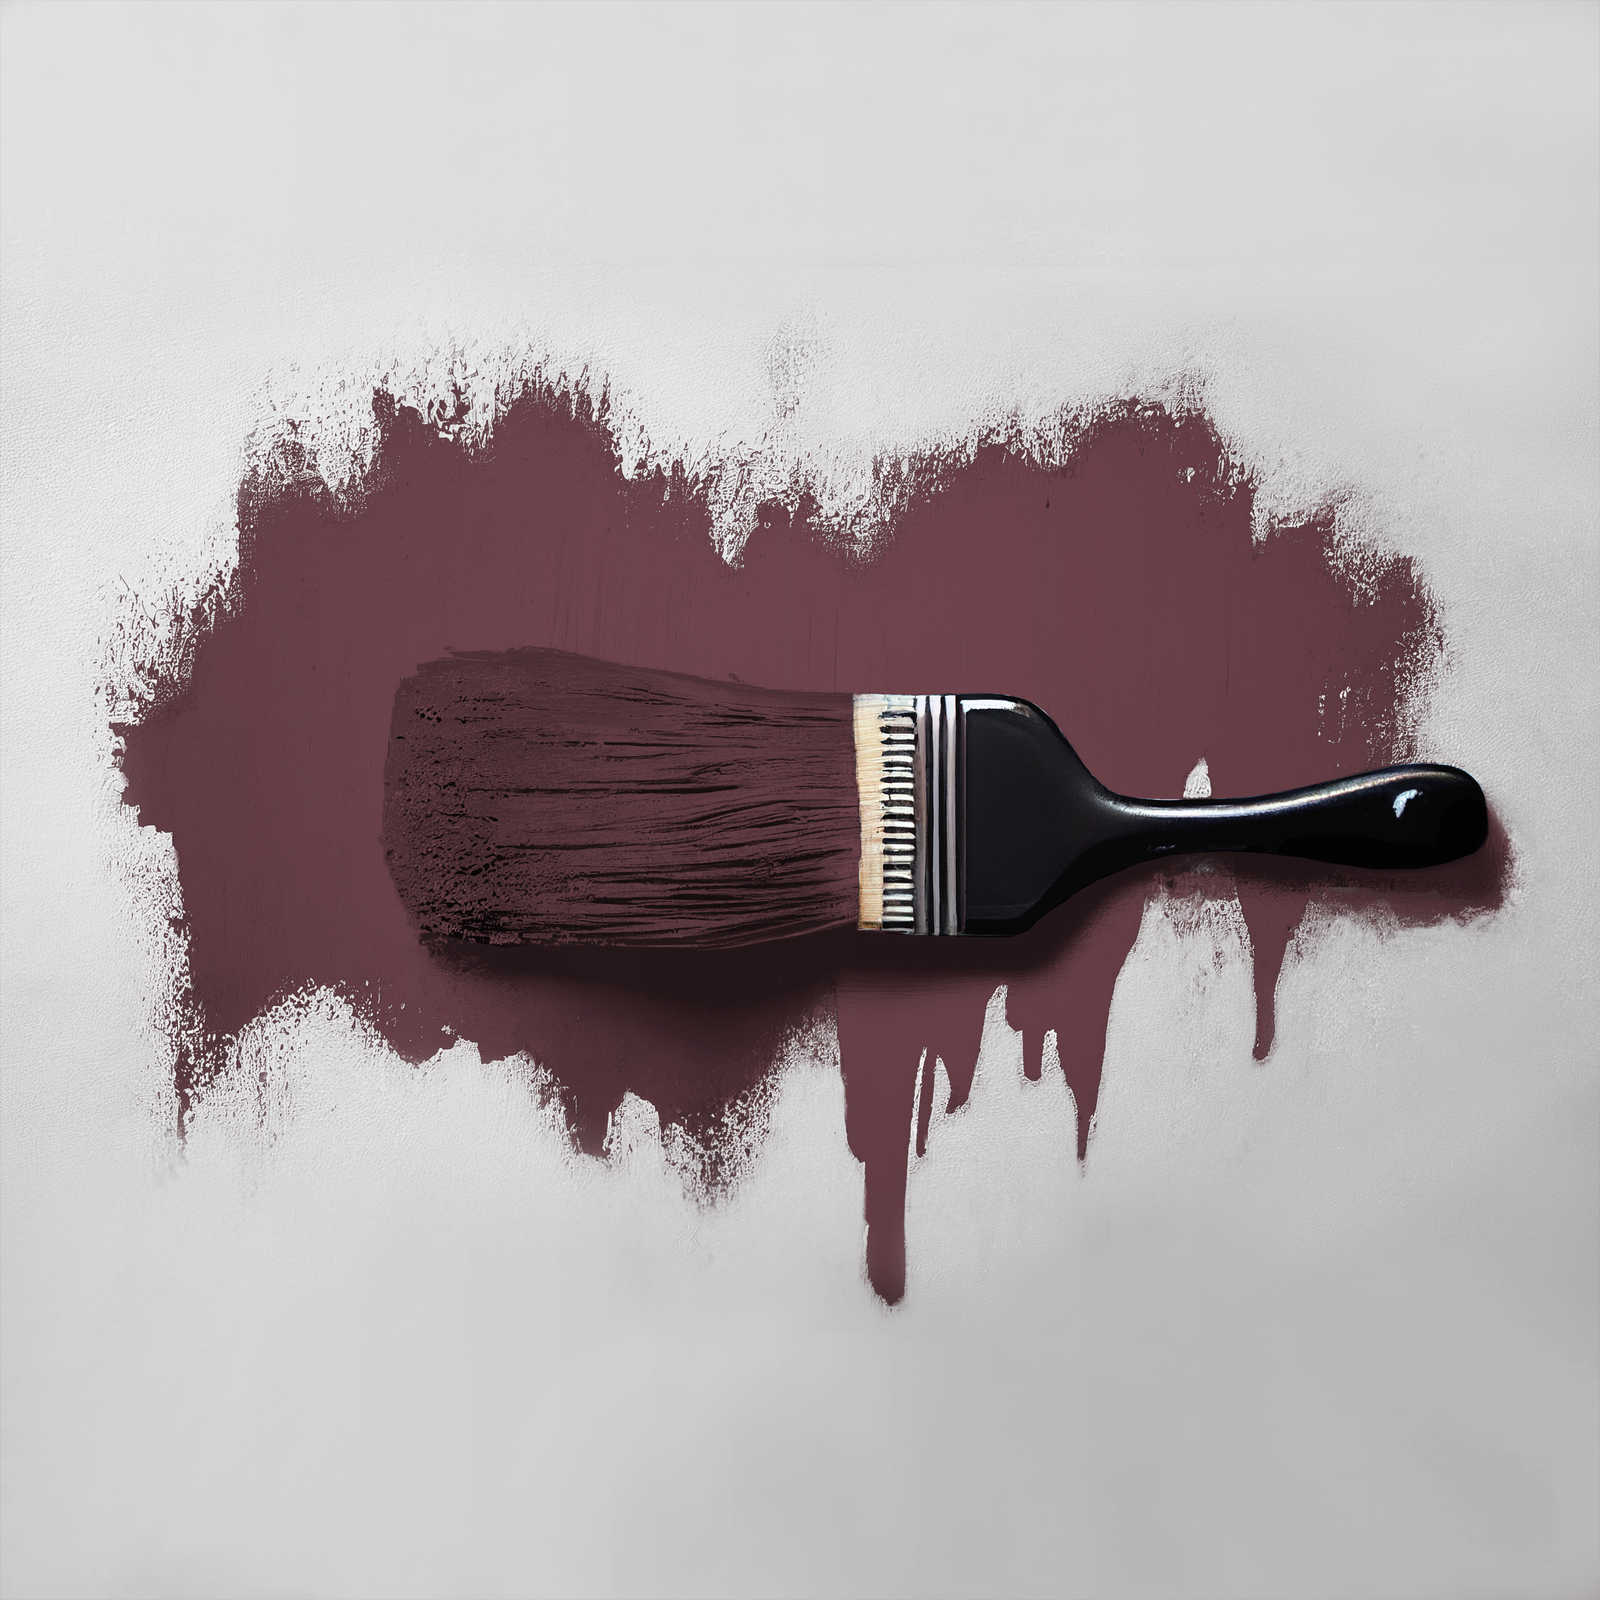             Pintura mural TCK7013 »Red Wine« en burdeos intenso – 2,5 litro
        